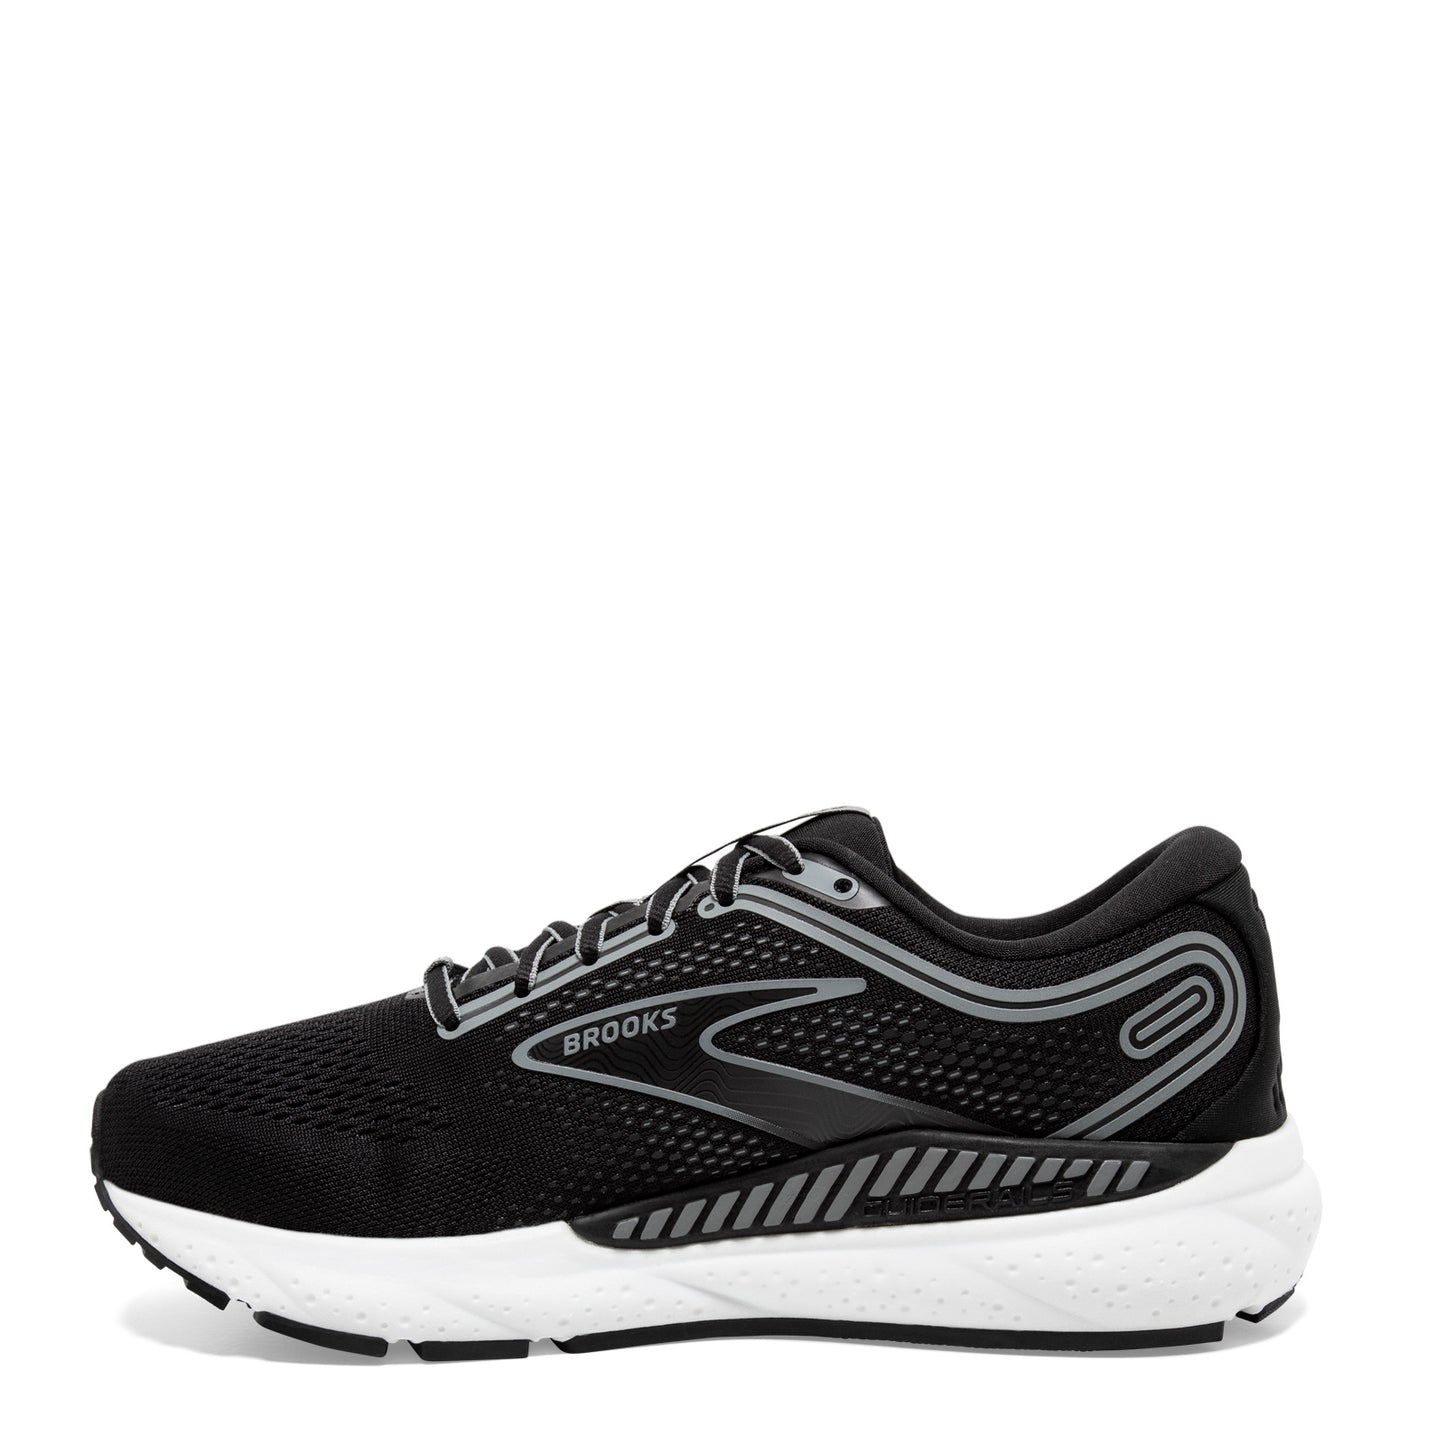 Peltz Shoes  Women's Brooks Ariel GTS 23 Running Shoe - Extra Wide Width Black/Grey/White 120390 2E 090